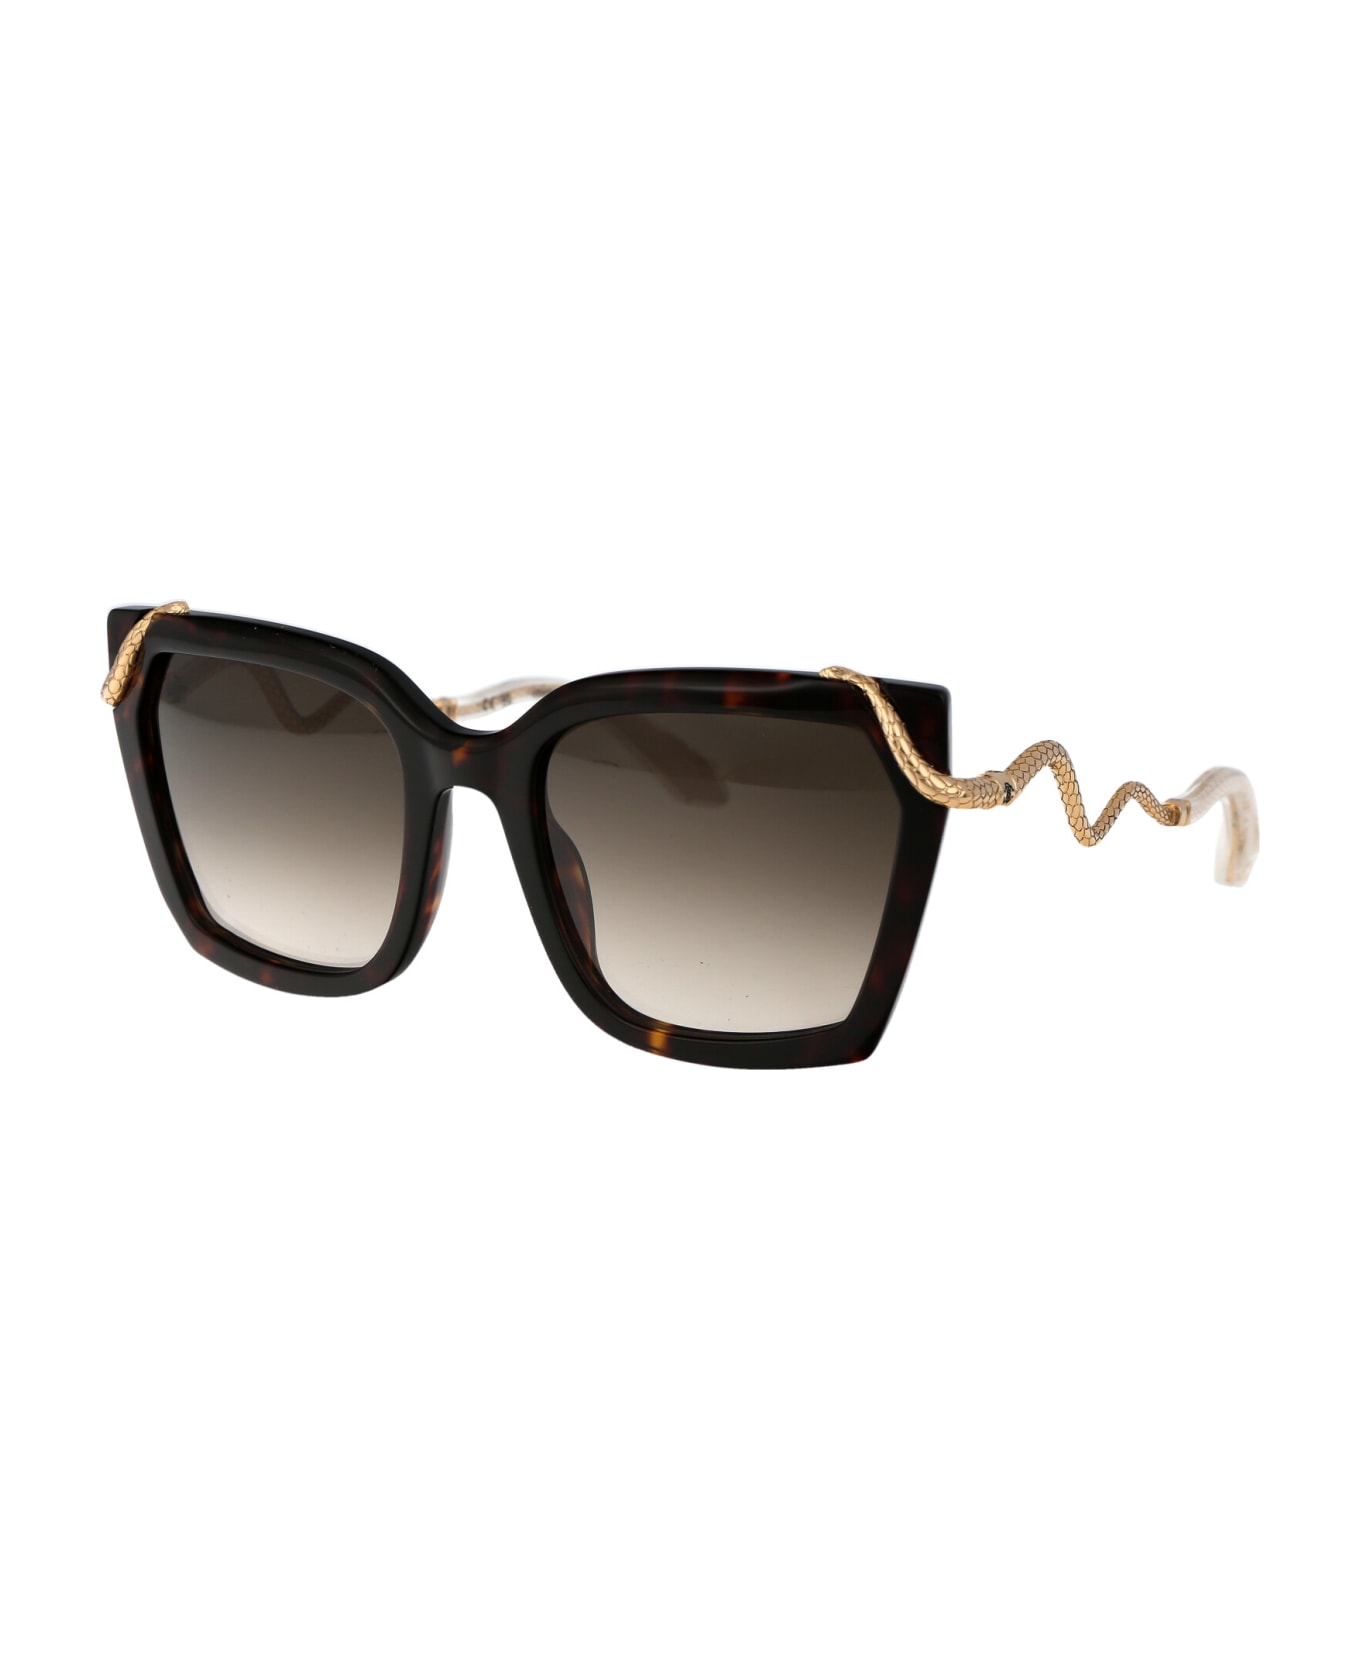 Roberto Cavalli Src034m Sunglasses - 0743 BROWN